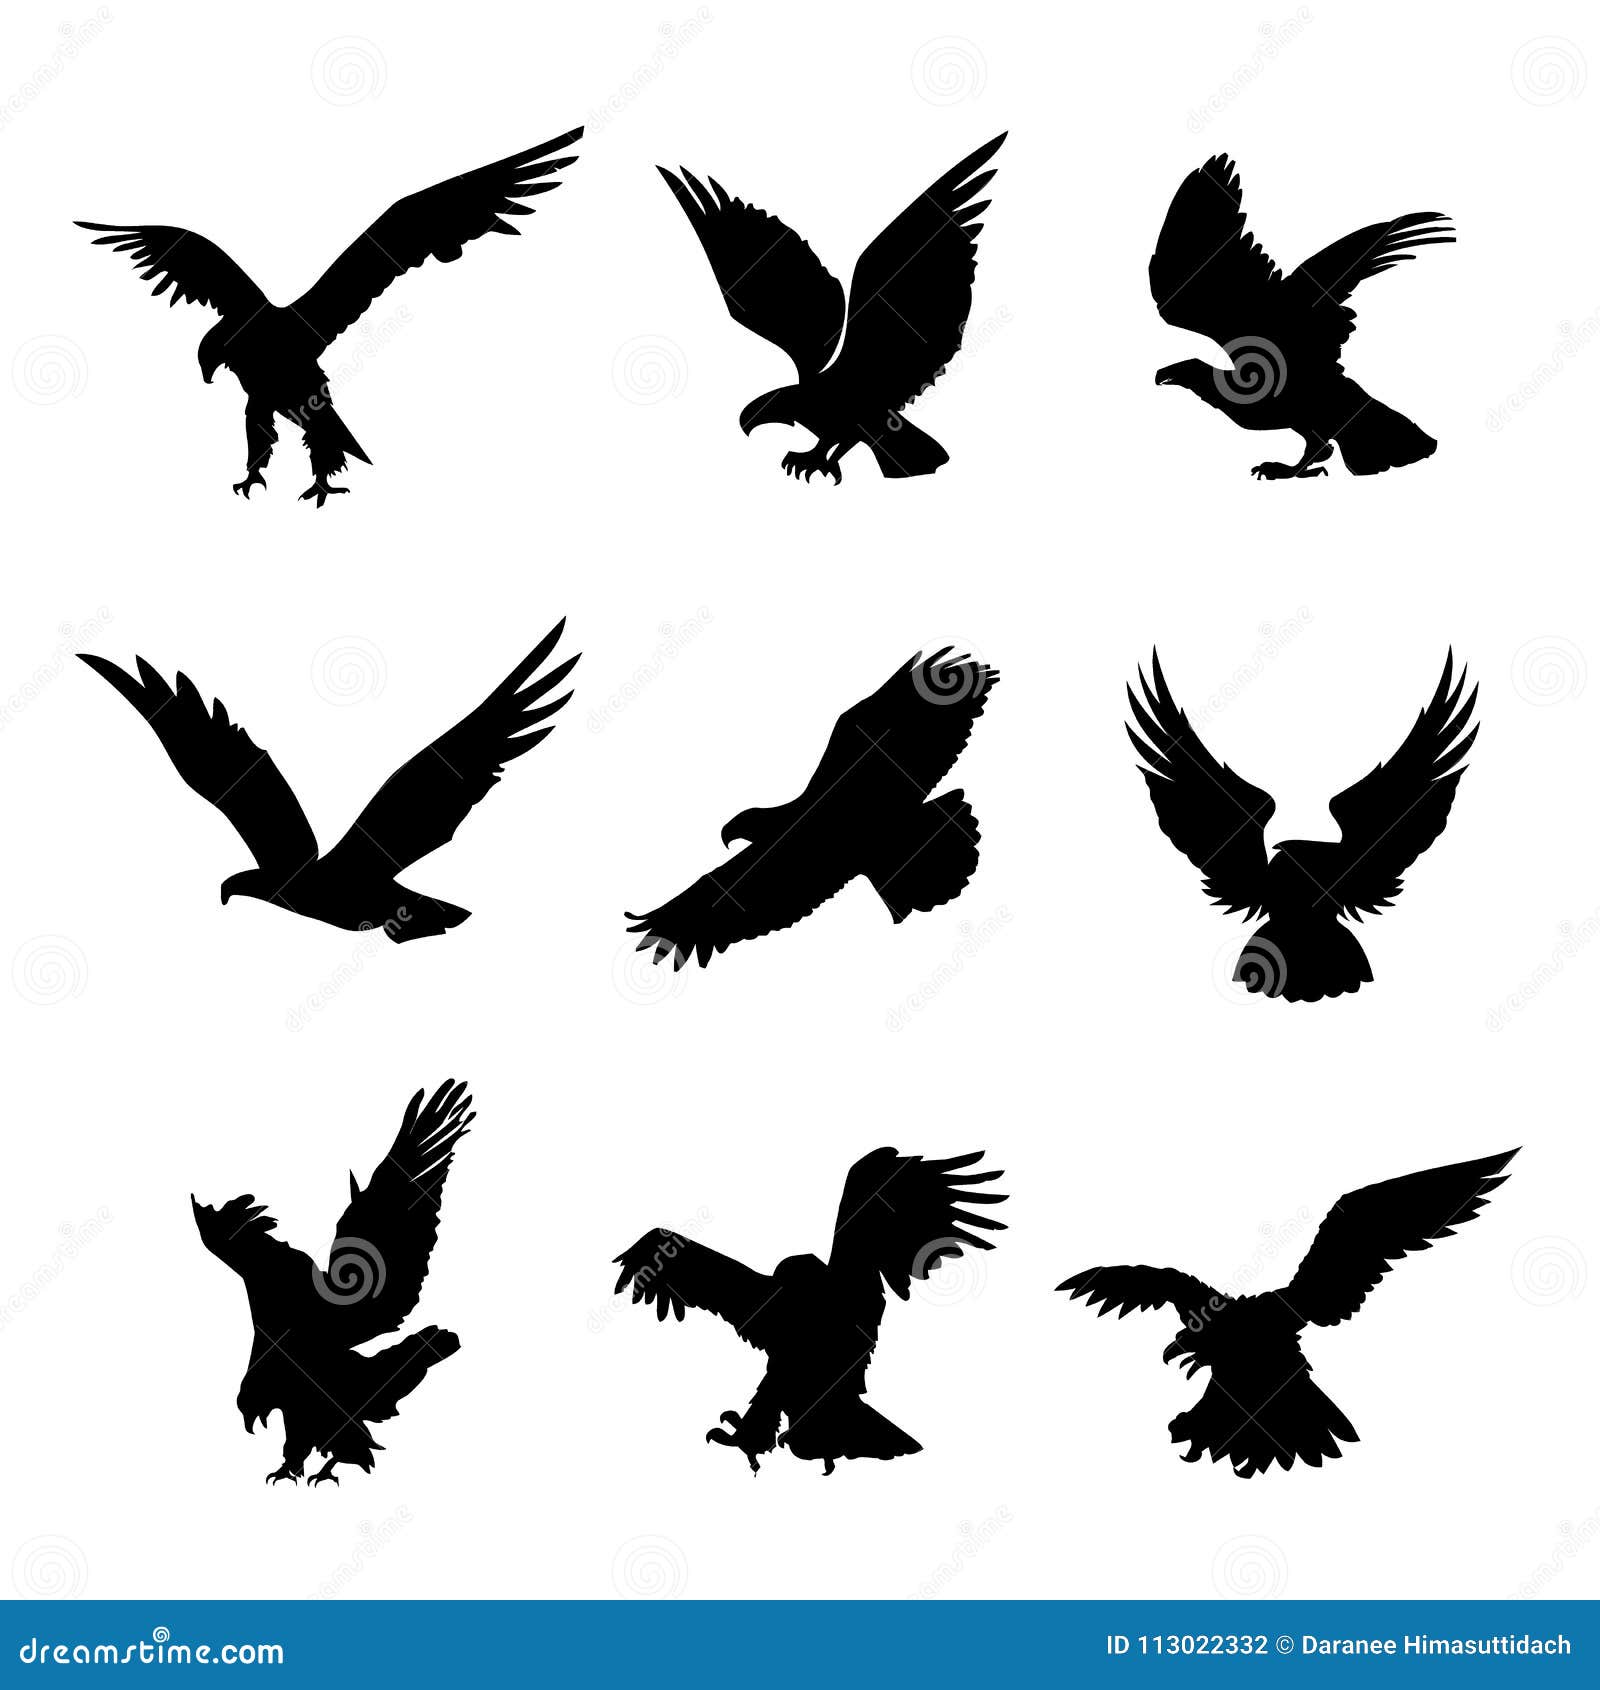 eagle falcon bird hawk animal silhouette black icon flat    